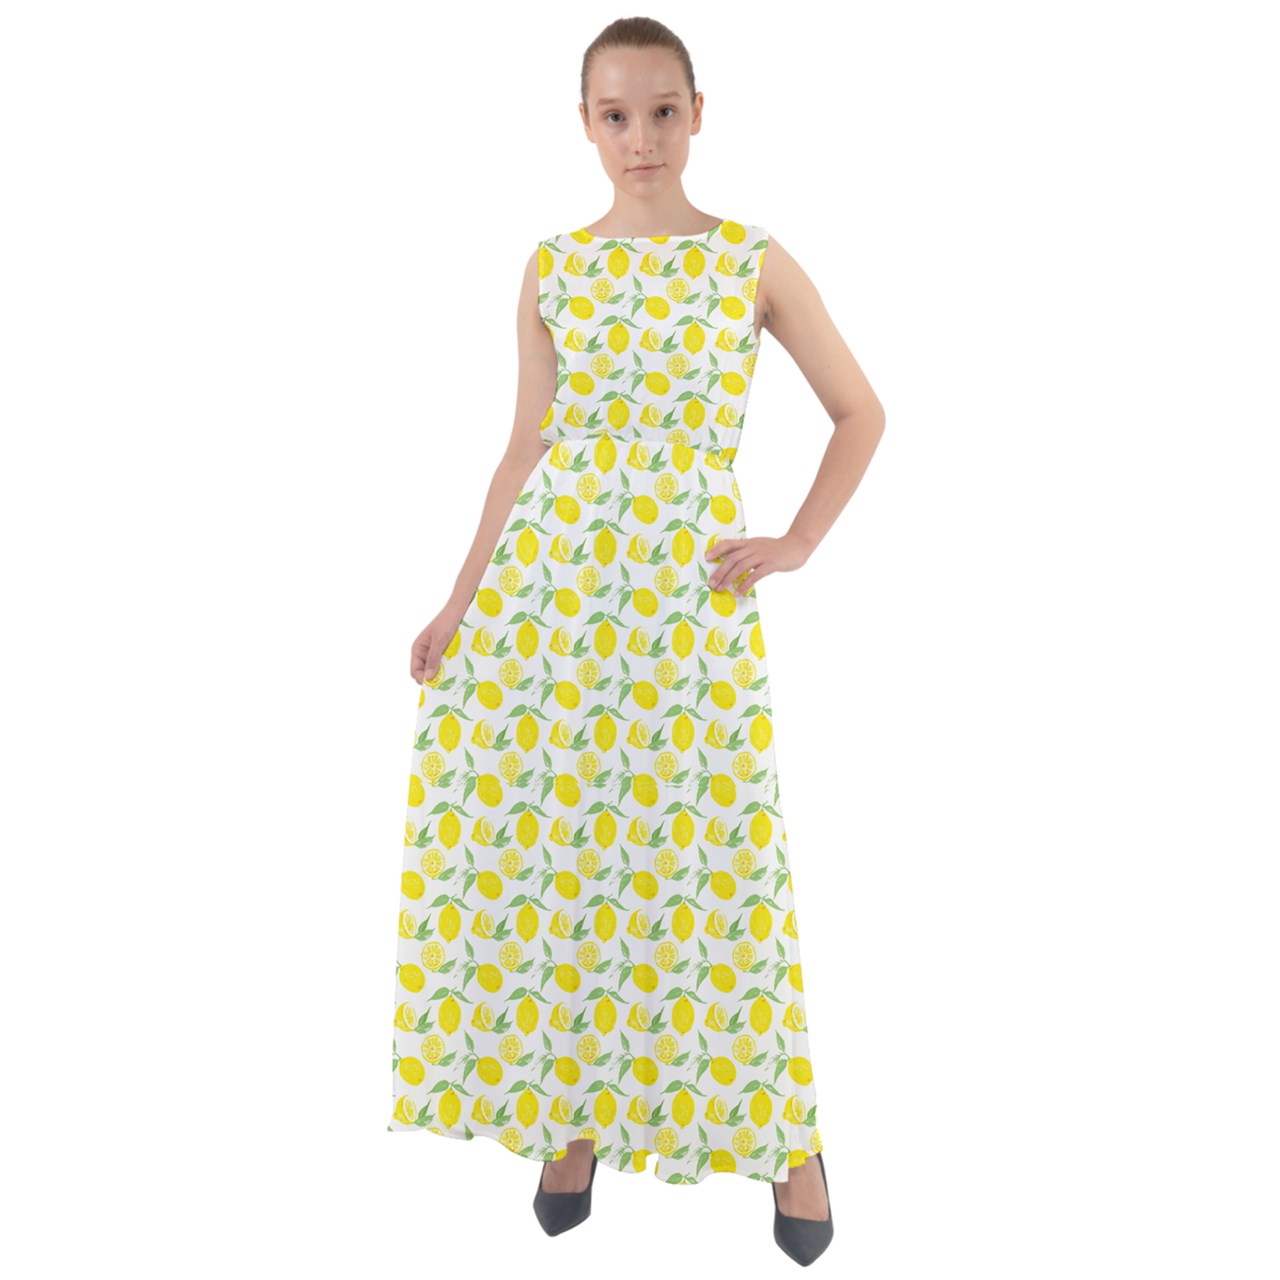 Lemon Dress, Lemon Maxi Dress, Lemon Print Dress, Yellow Maxi Dress, Sleeveless maxi Dress, Cute Dress, Spring Dress